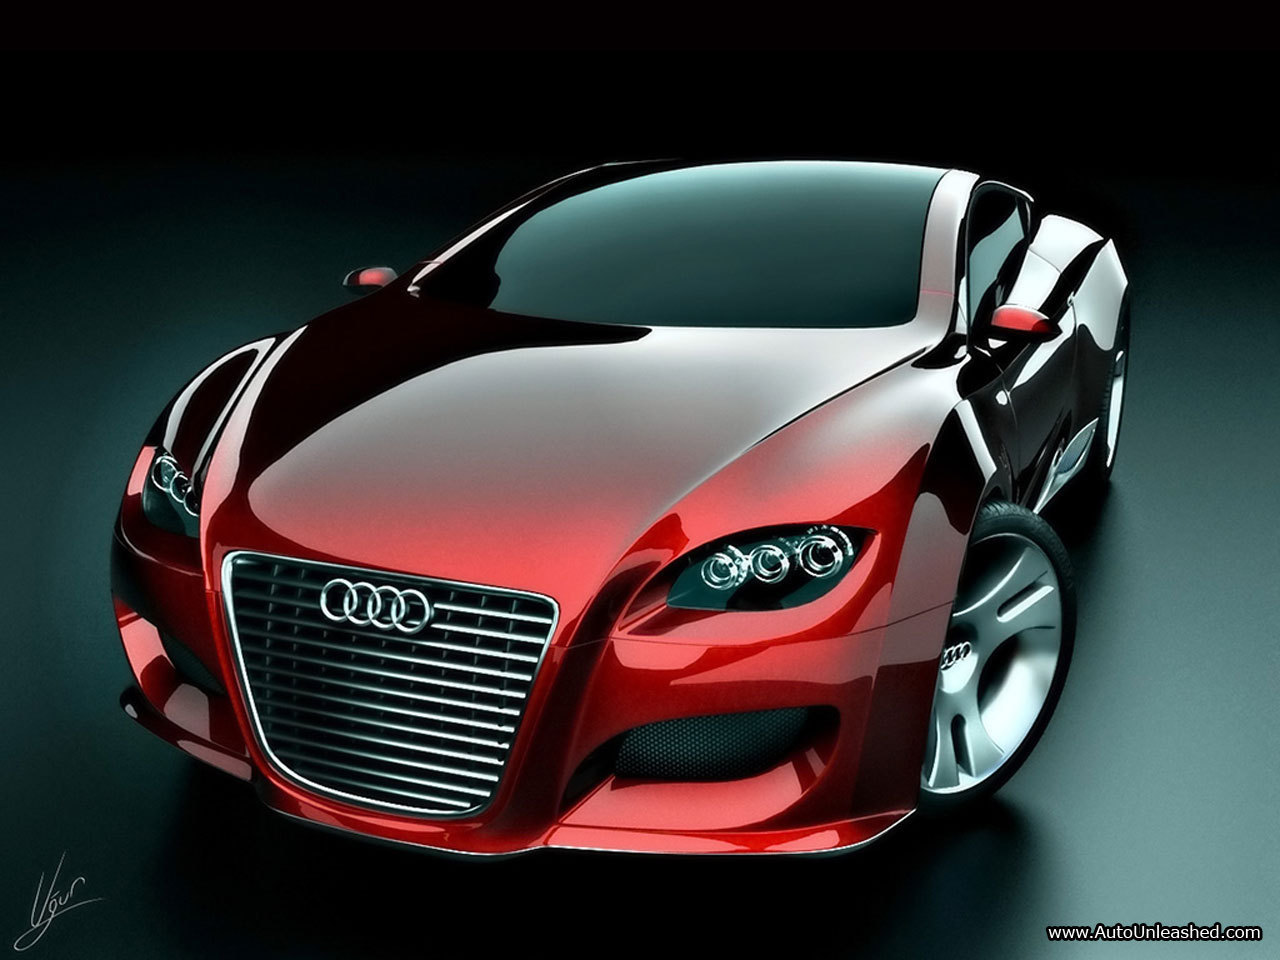 Audi Car Images For Wallpaper